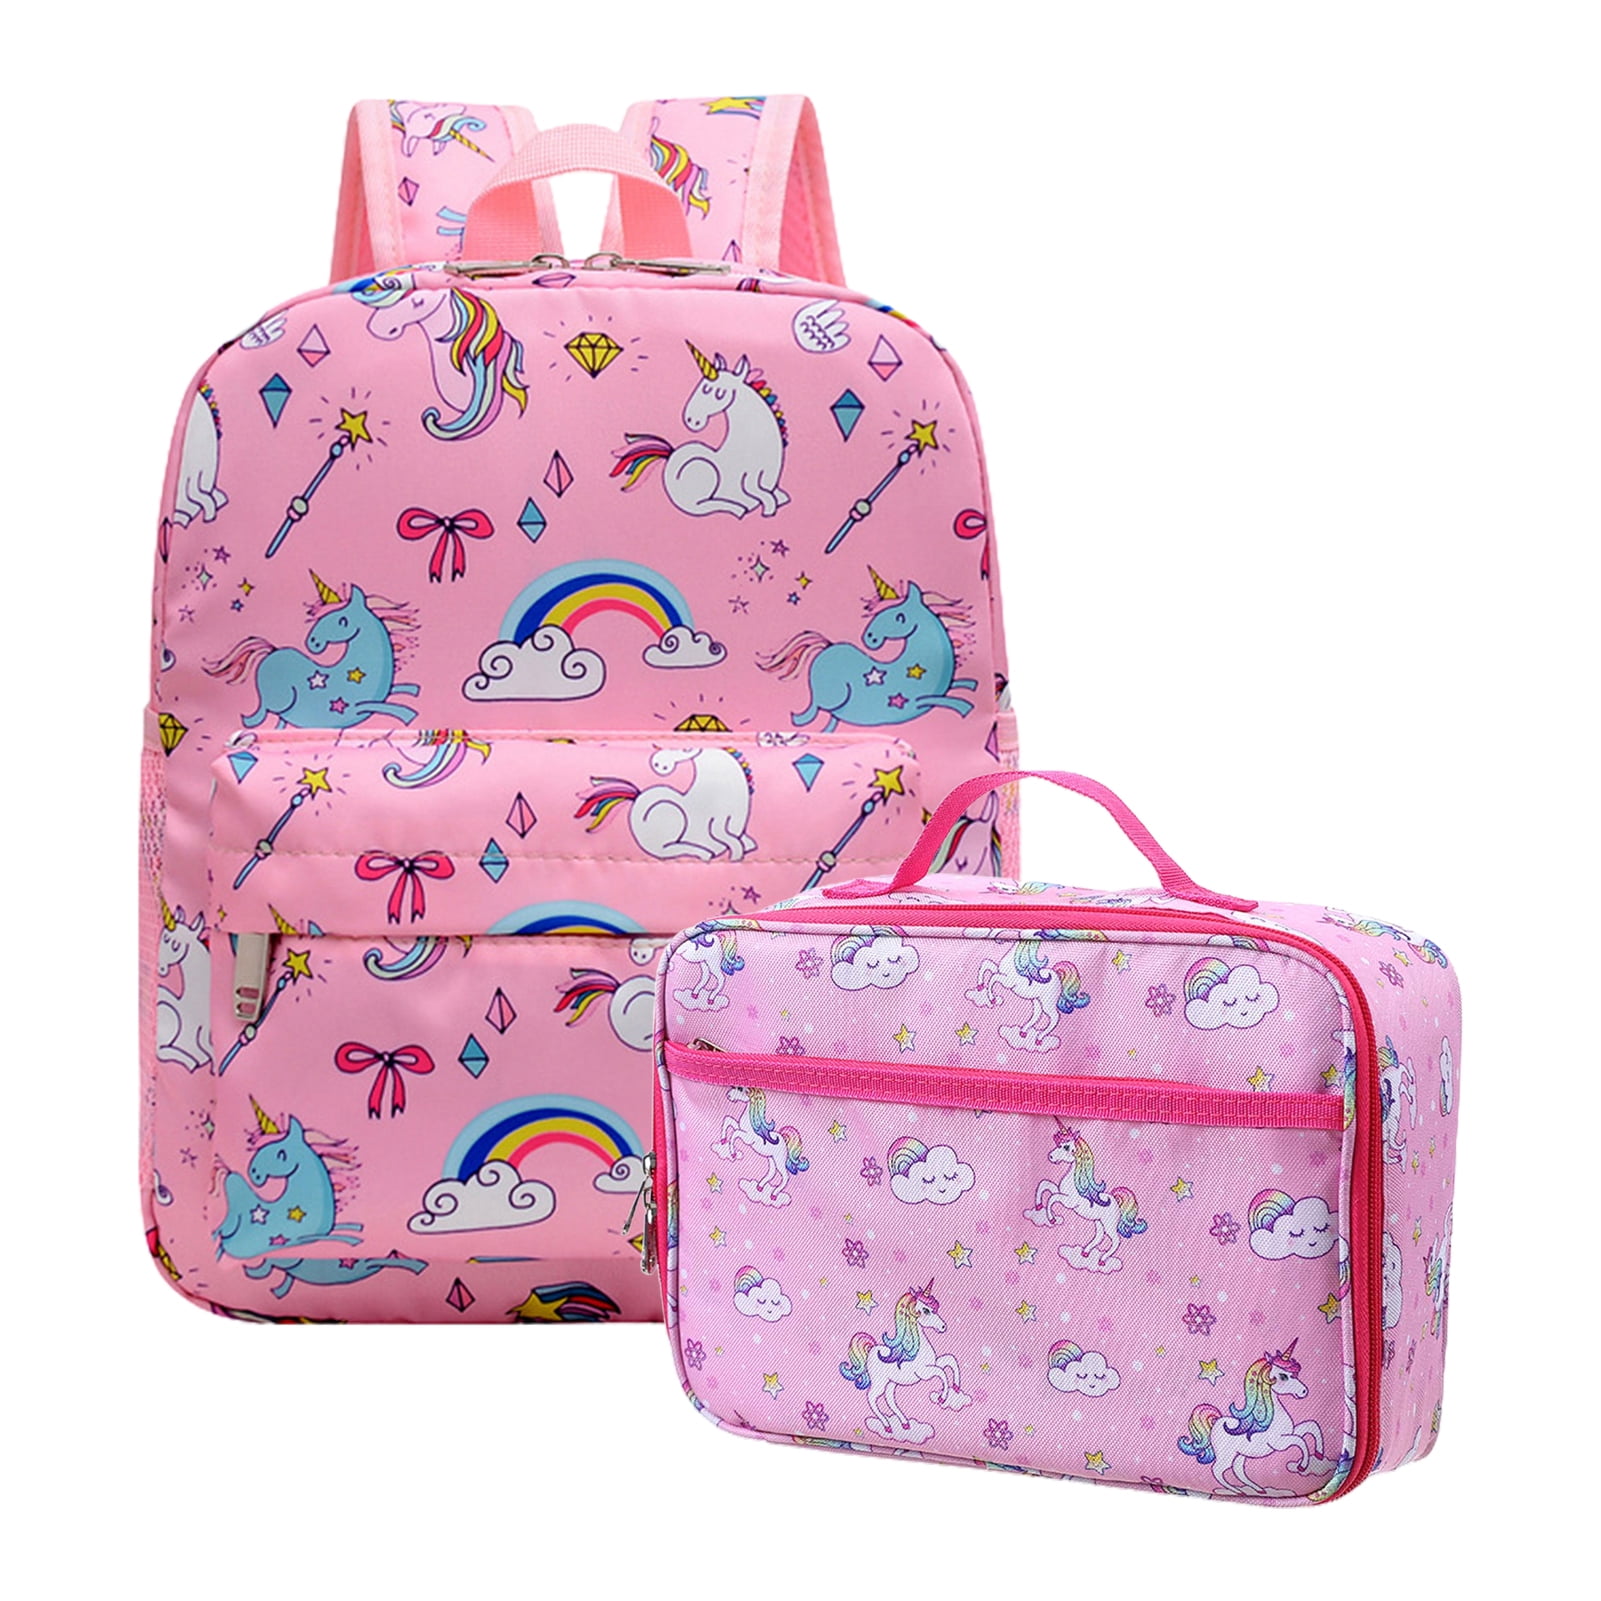 Rainbow Unicorn Lunch Bag for Girls - Neoprene Insulated Kids Lunch Tote  Bag for School Preschool Kindergarten Lunch Box - AliExpress